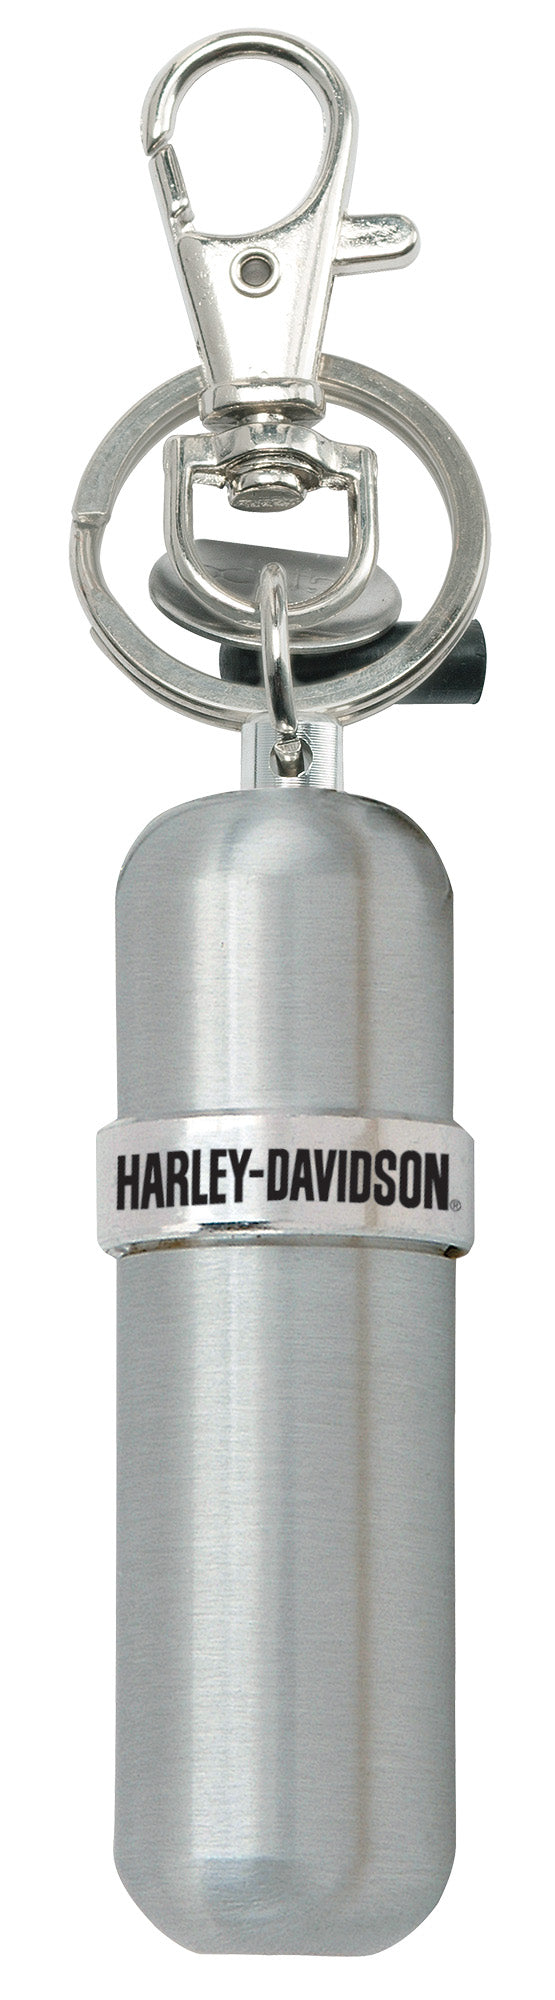 Zippo Lighter Set: Harley-Davidson Lighter and Fuel Canister - Street Chrome 46131